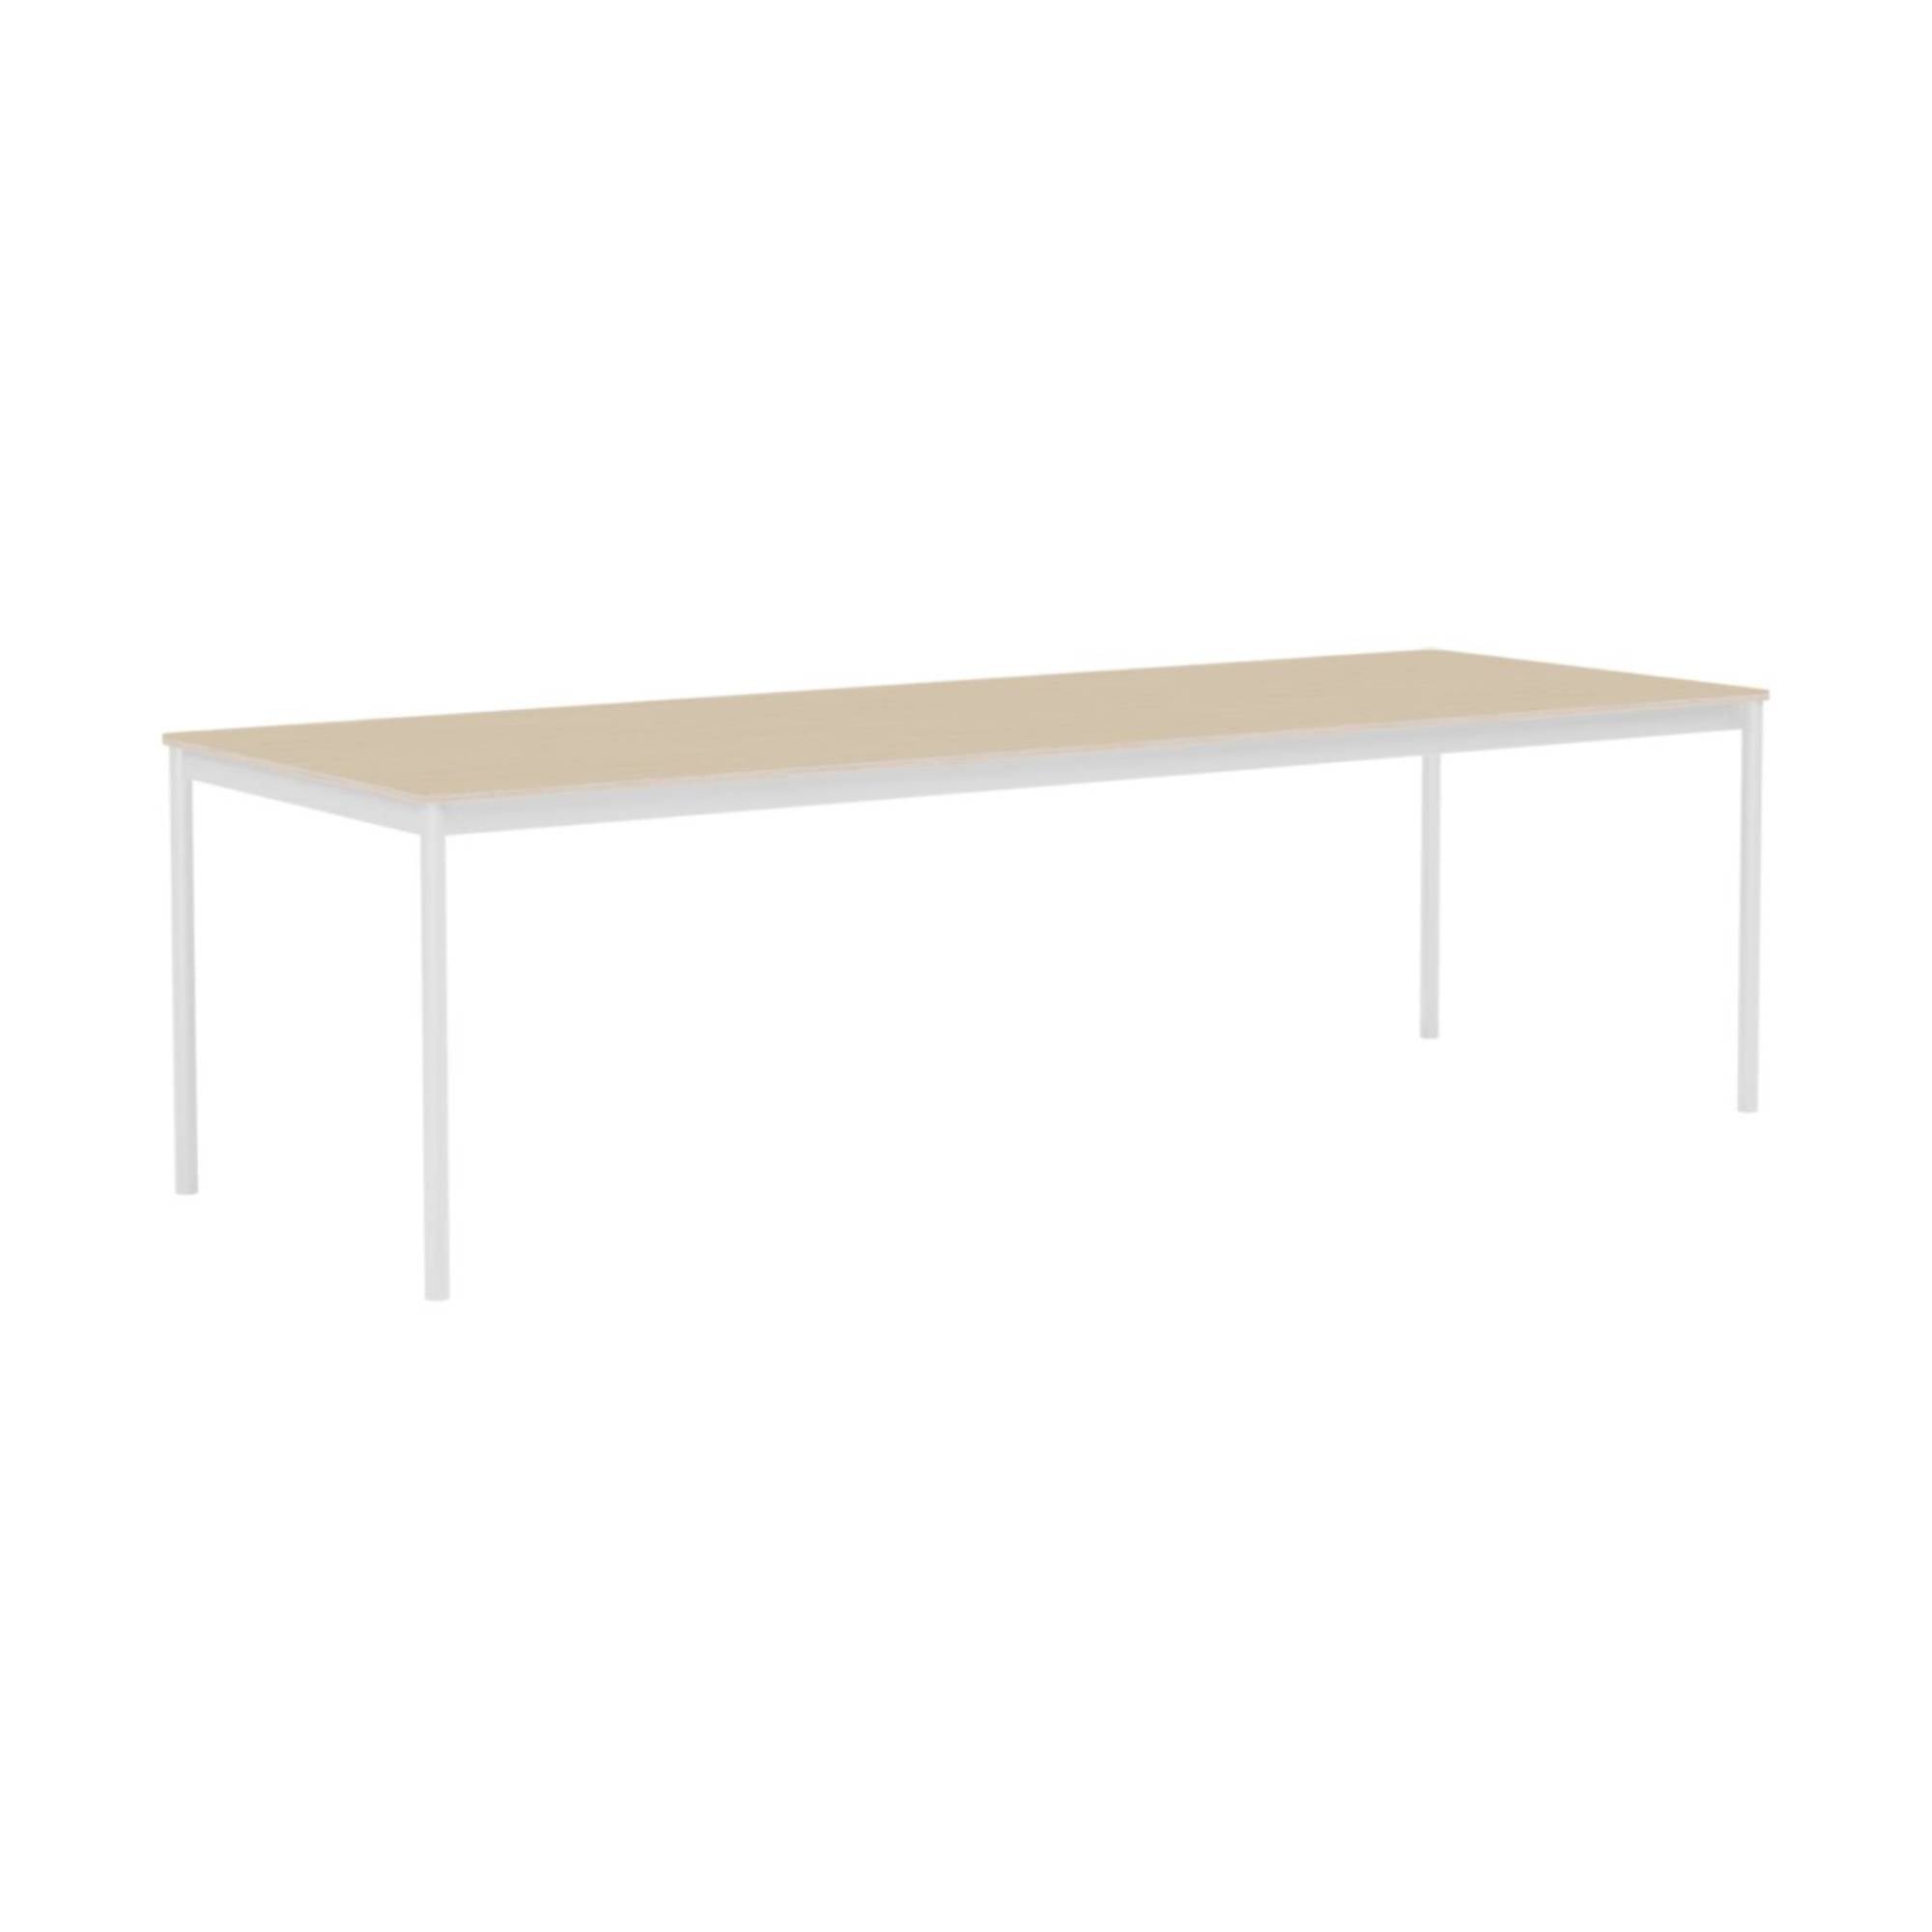 Base Table: Large + Oak Veneer + Plywood Edge + White